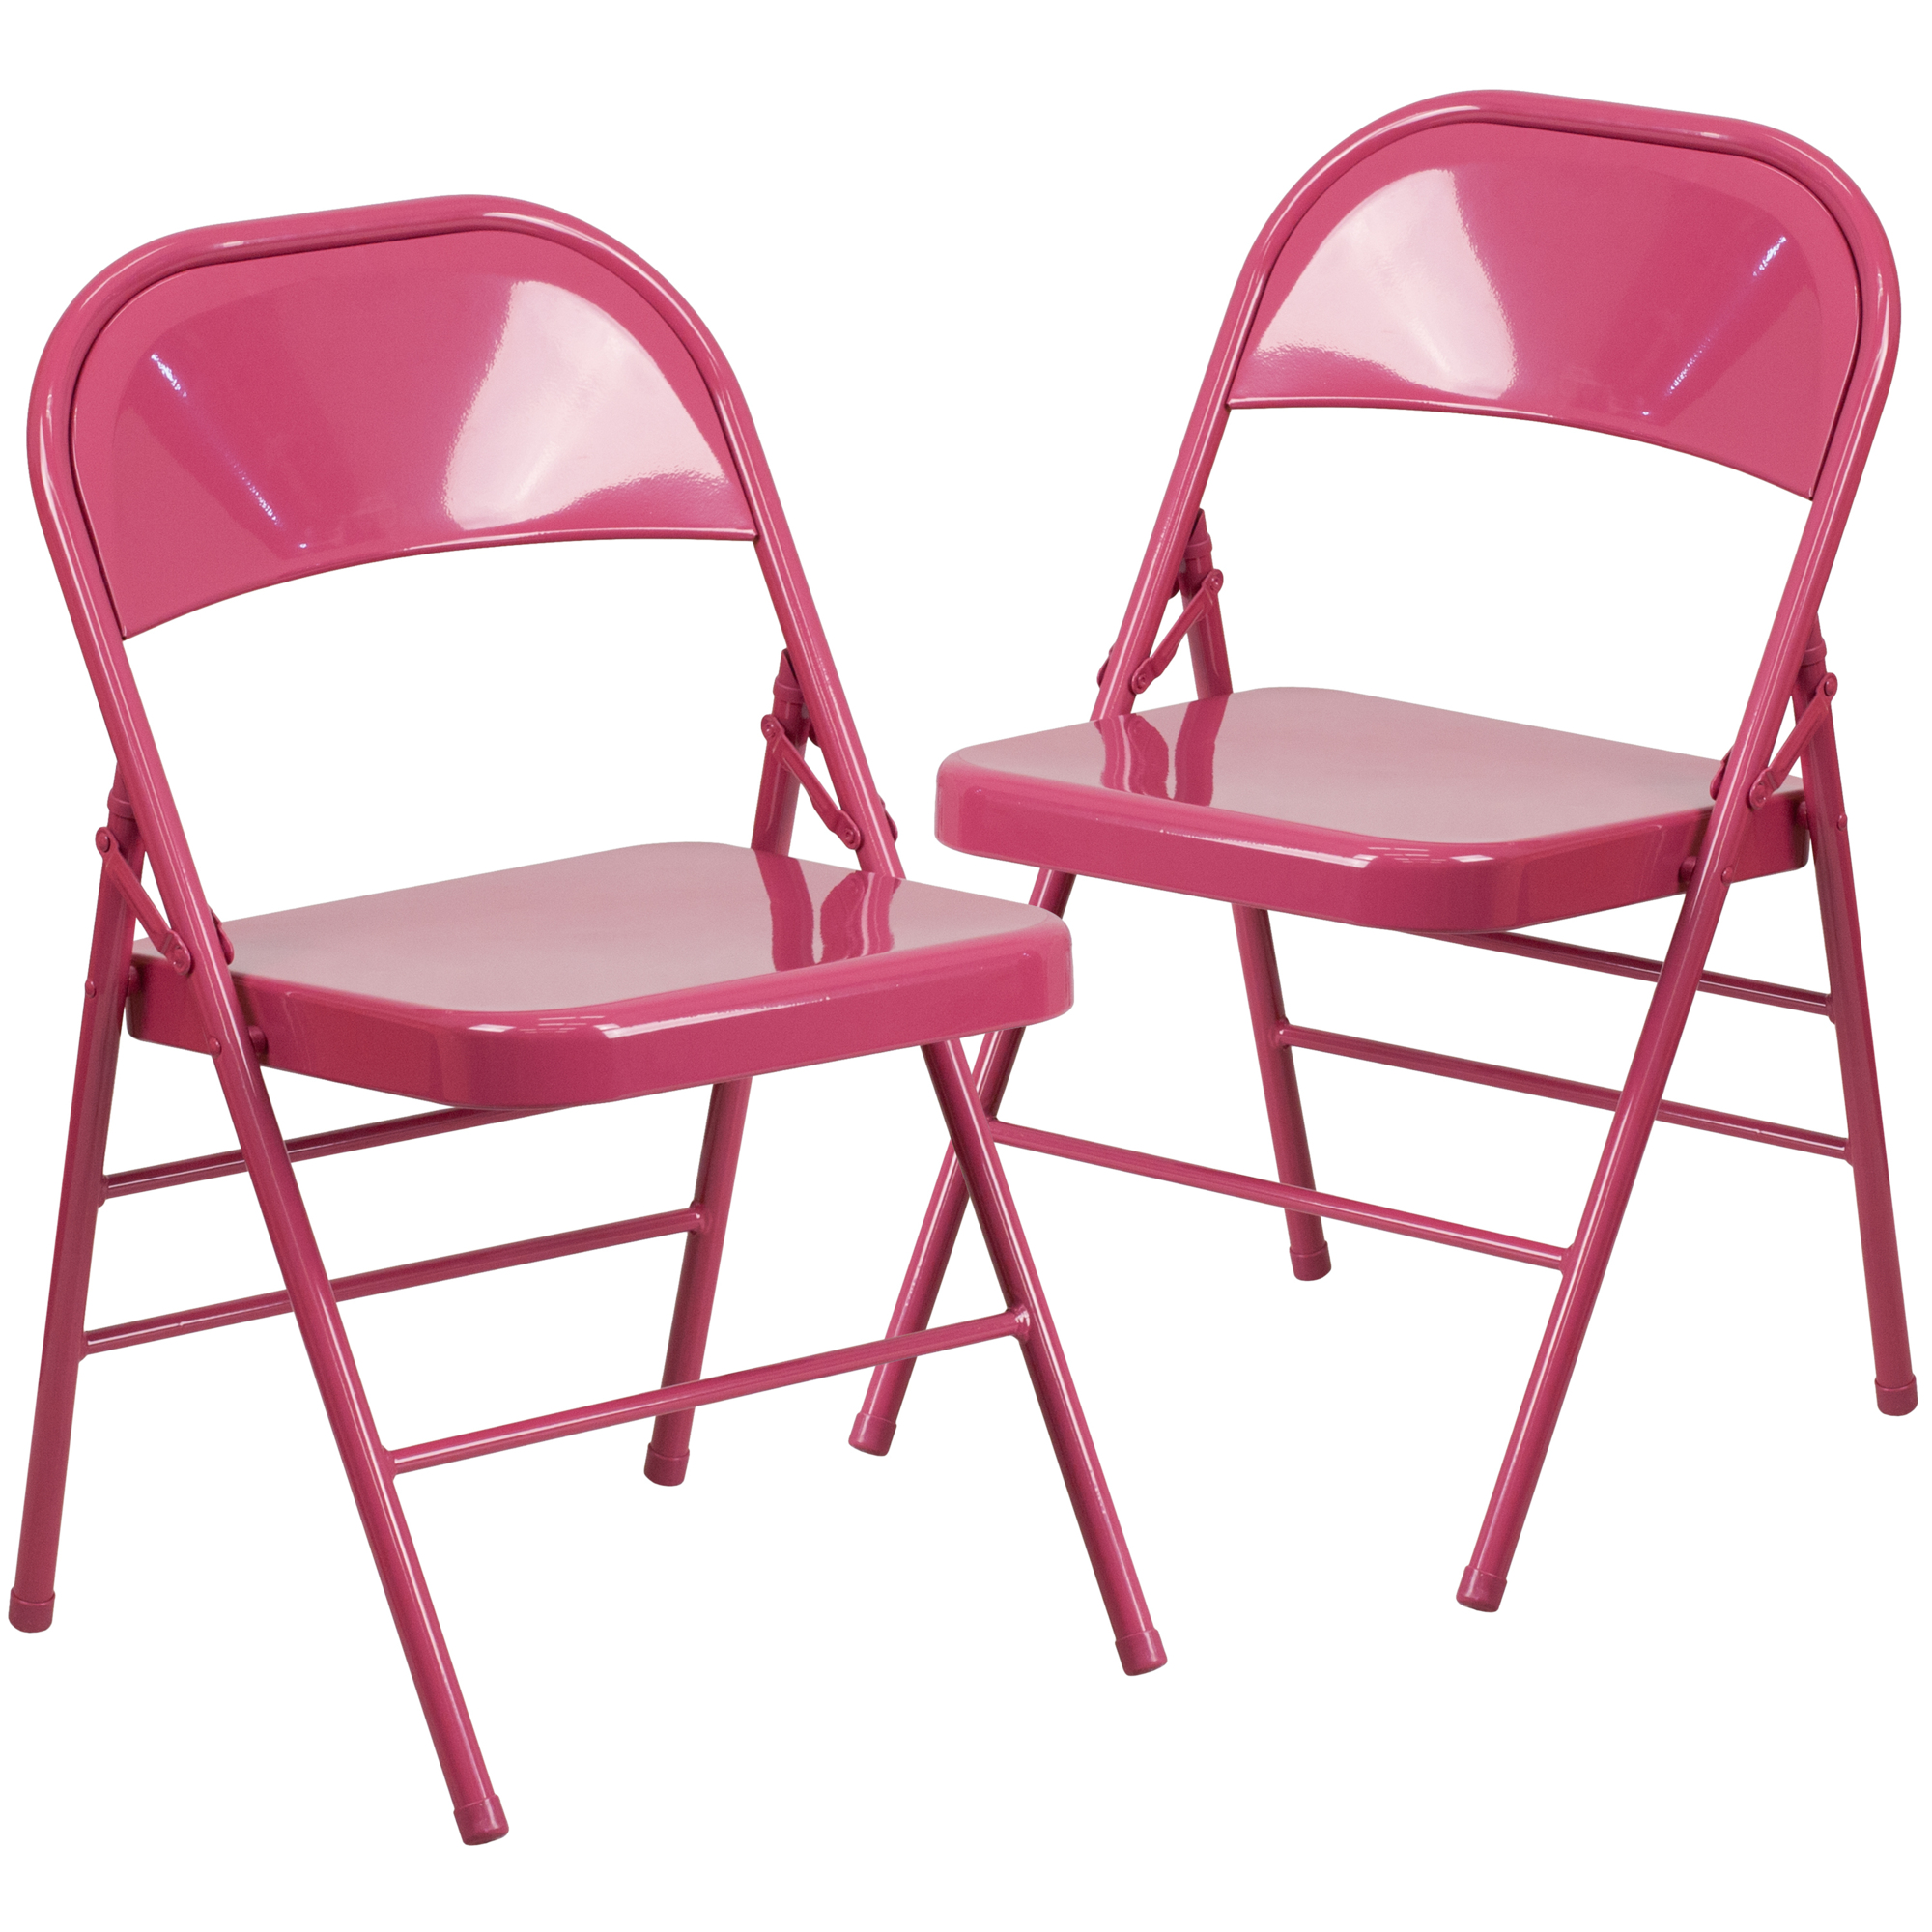 Flash Furniture, Shocking Fuchsia Triple Braced Metal Folding Chair, Primary Color Pink, Included (qty.) 2, Model 2HF3FUCHSIA